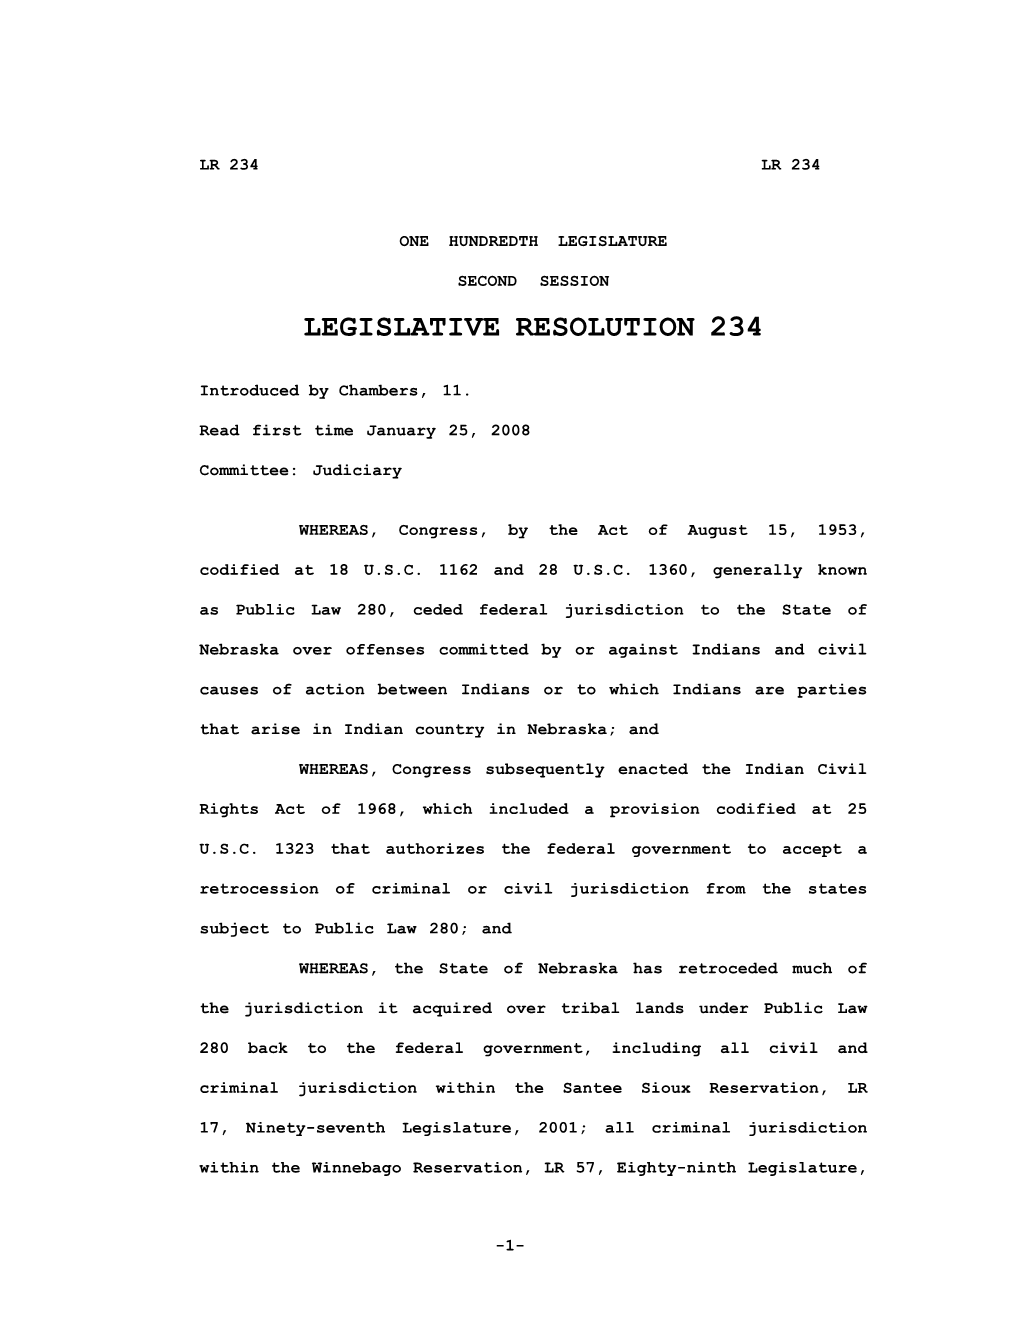 Legislative Resolution 234